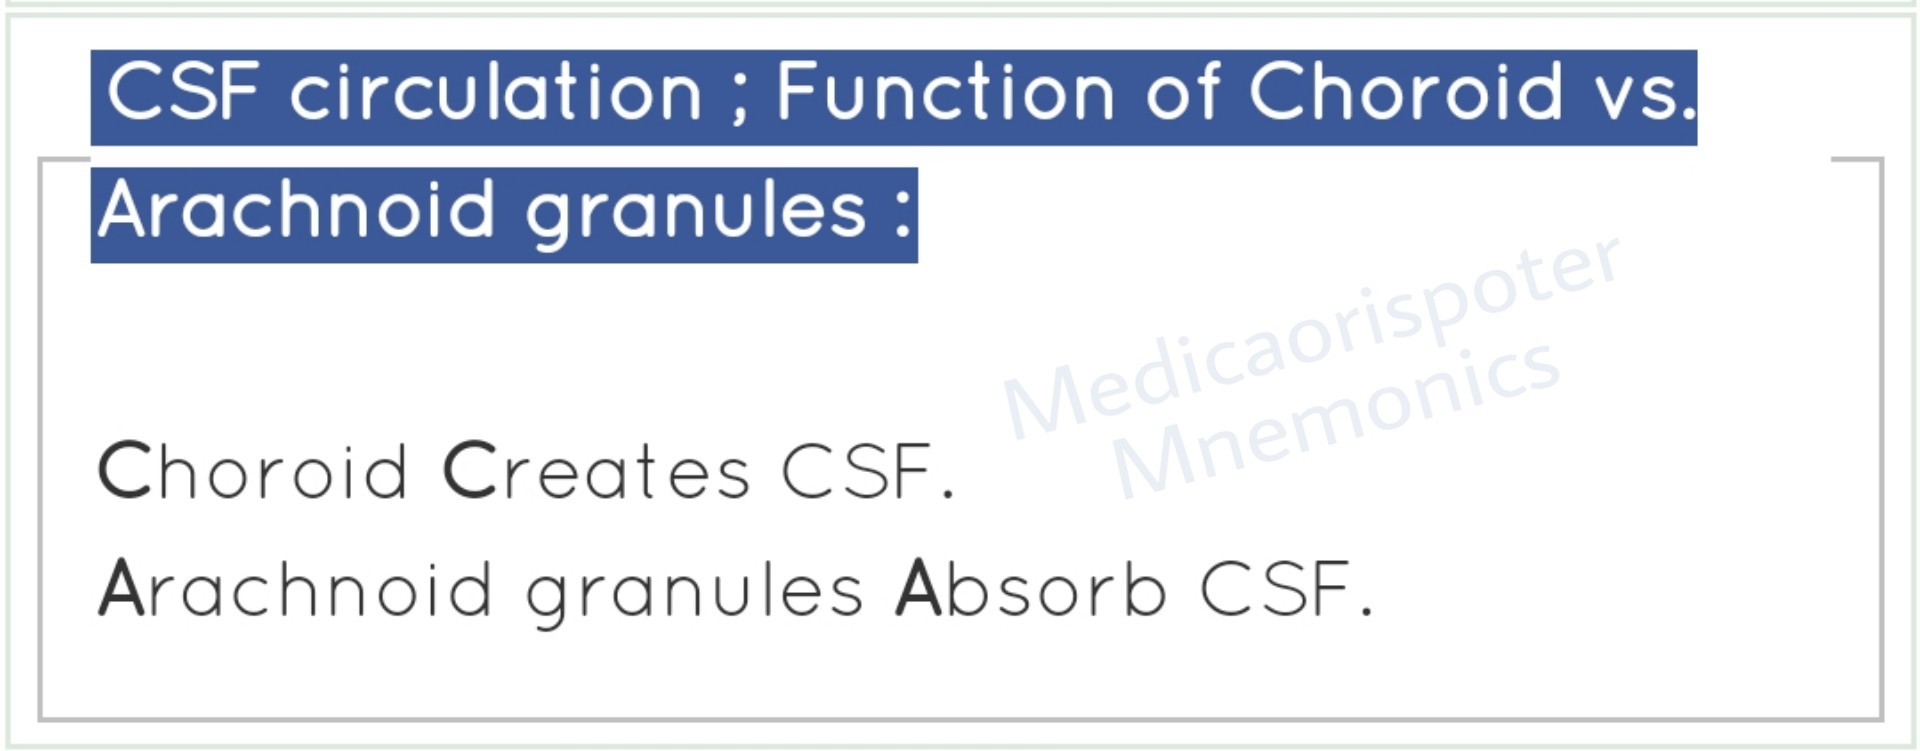 Functions of Choroid vs Arachnoid Granules in CSF